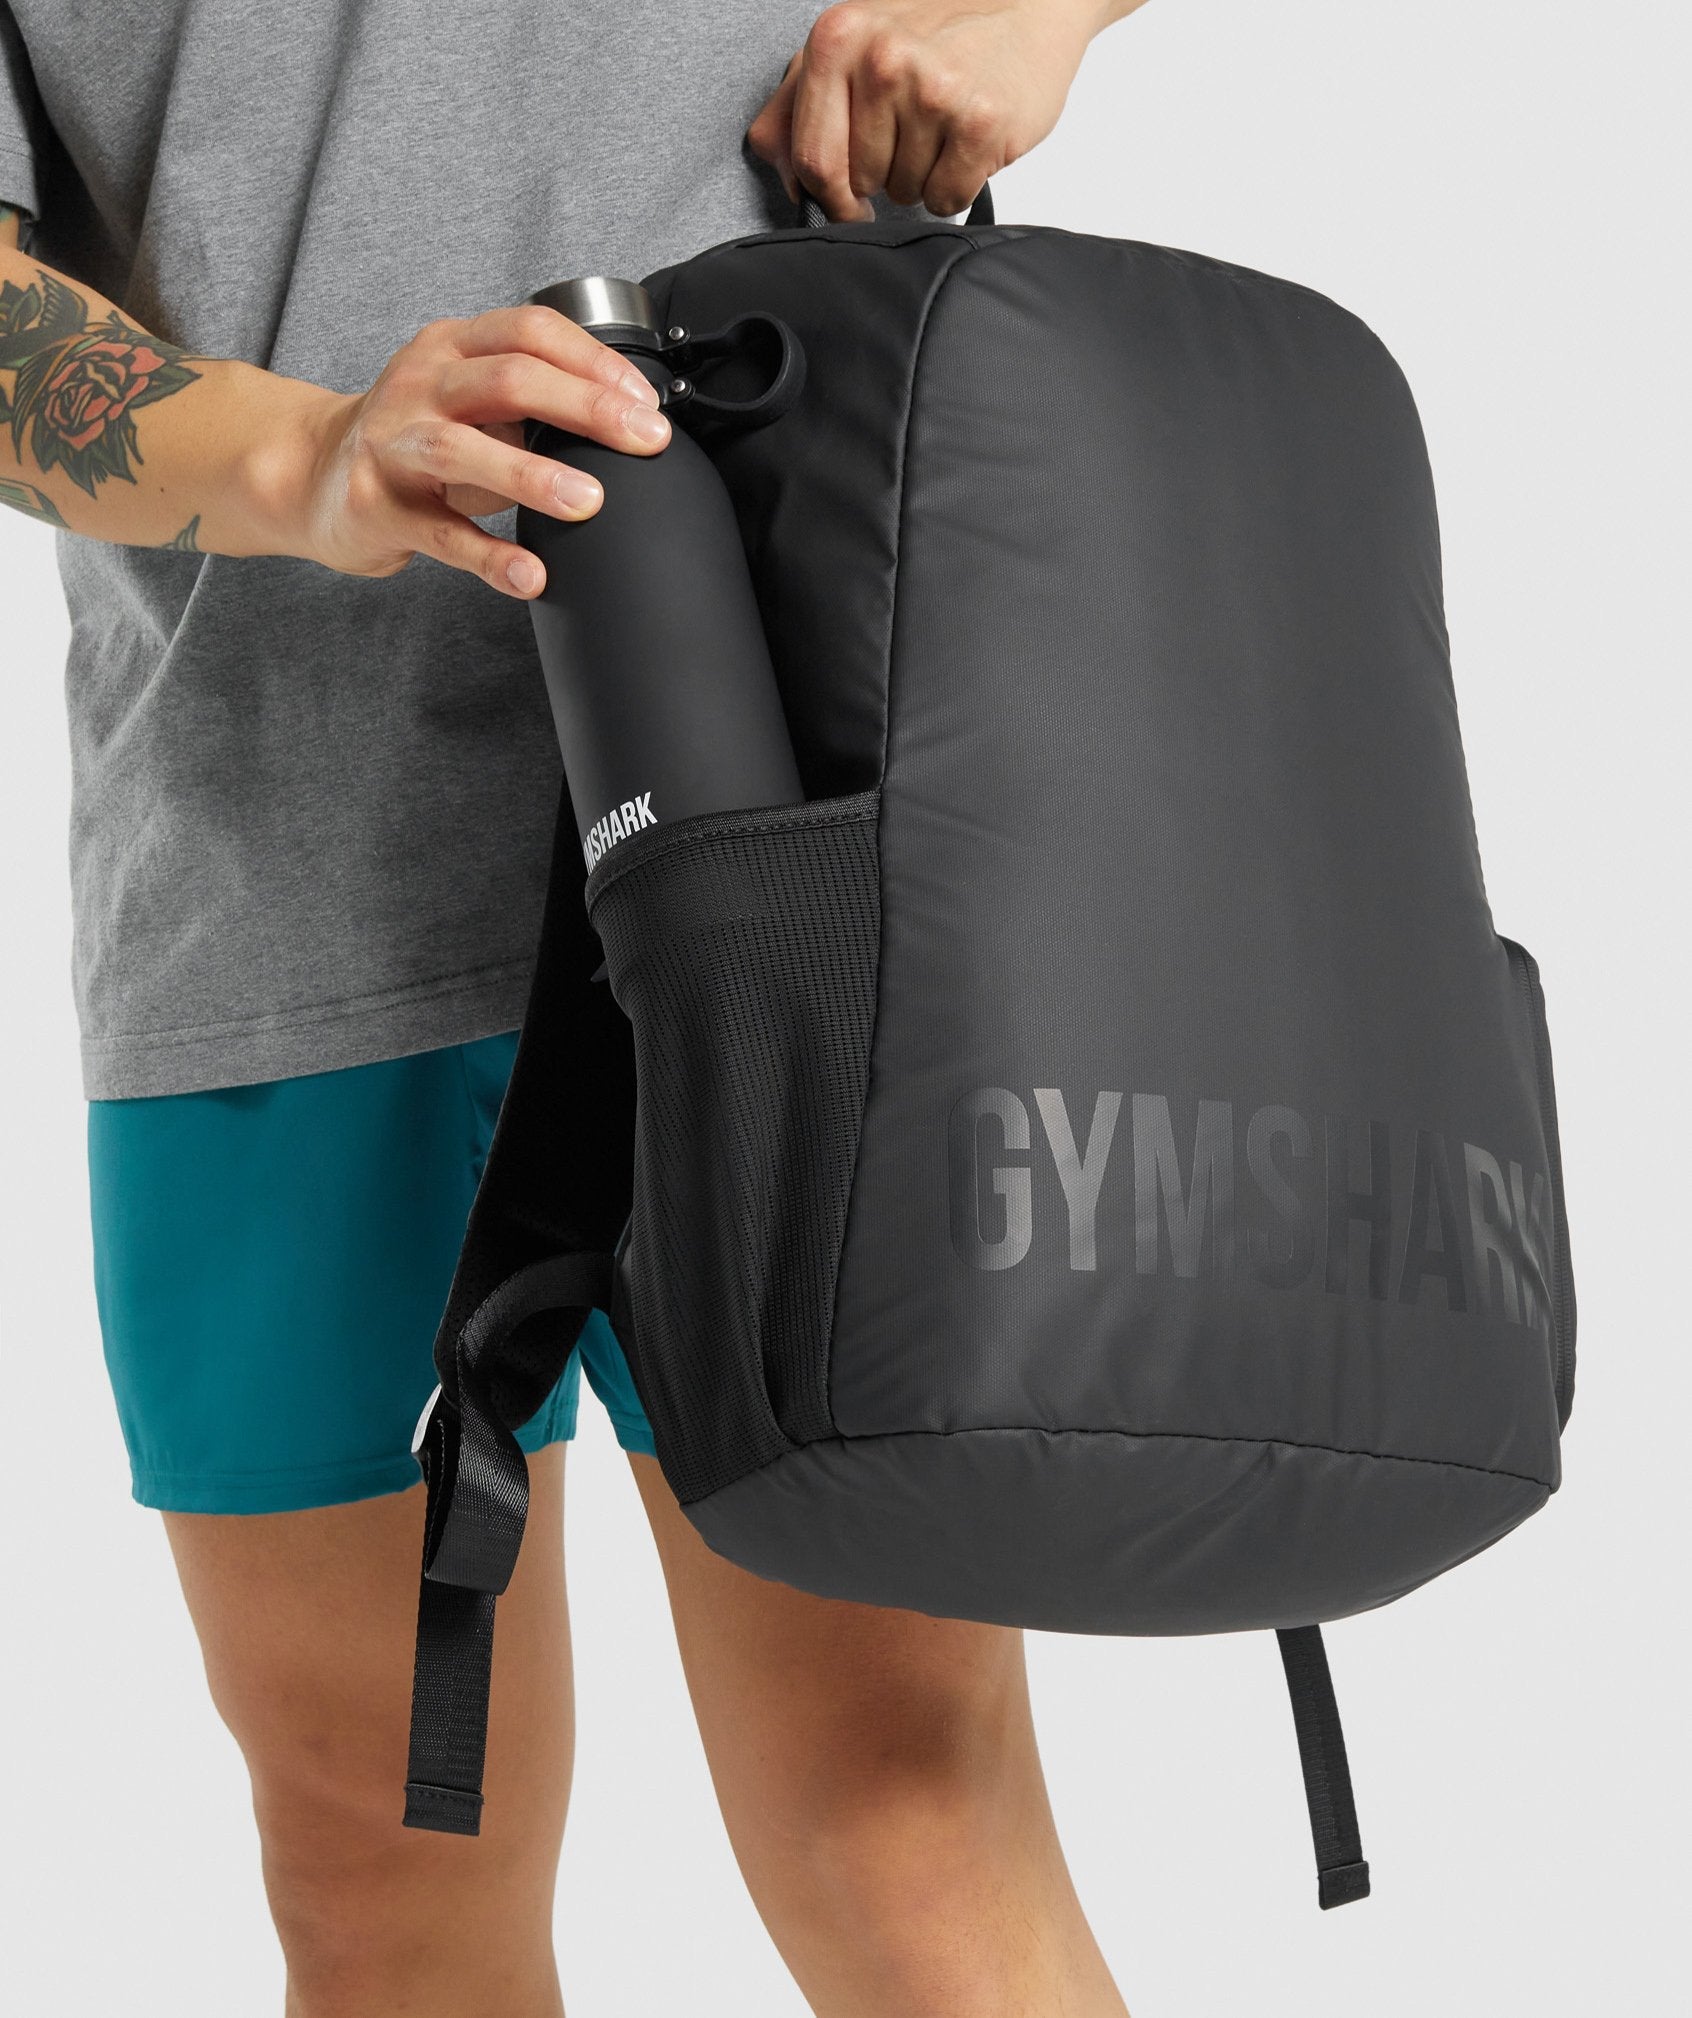 X-Series Backpack 0.1 in Black - view 6